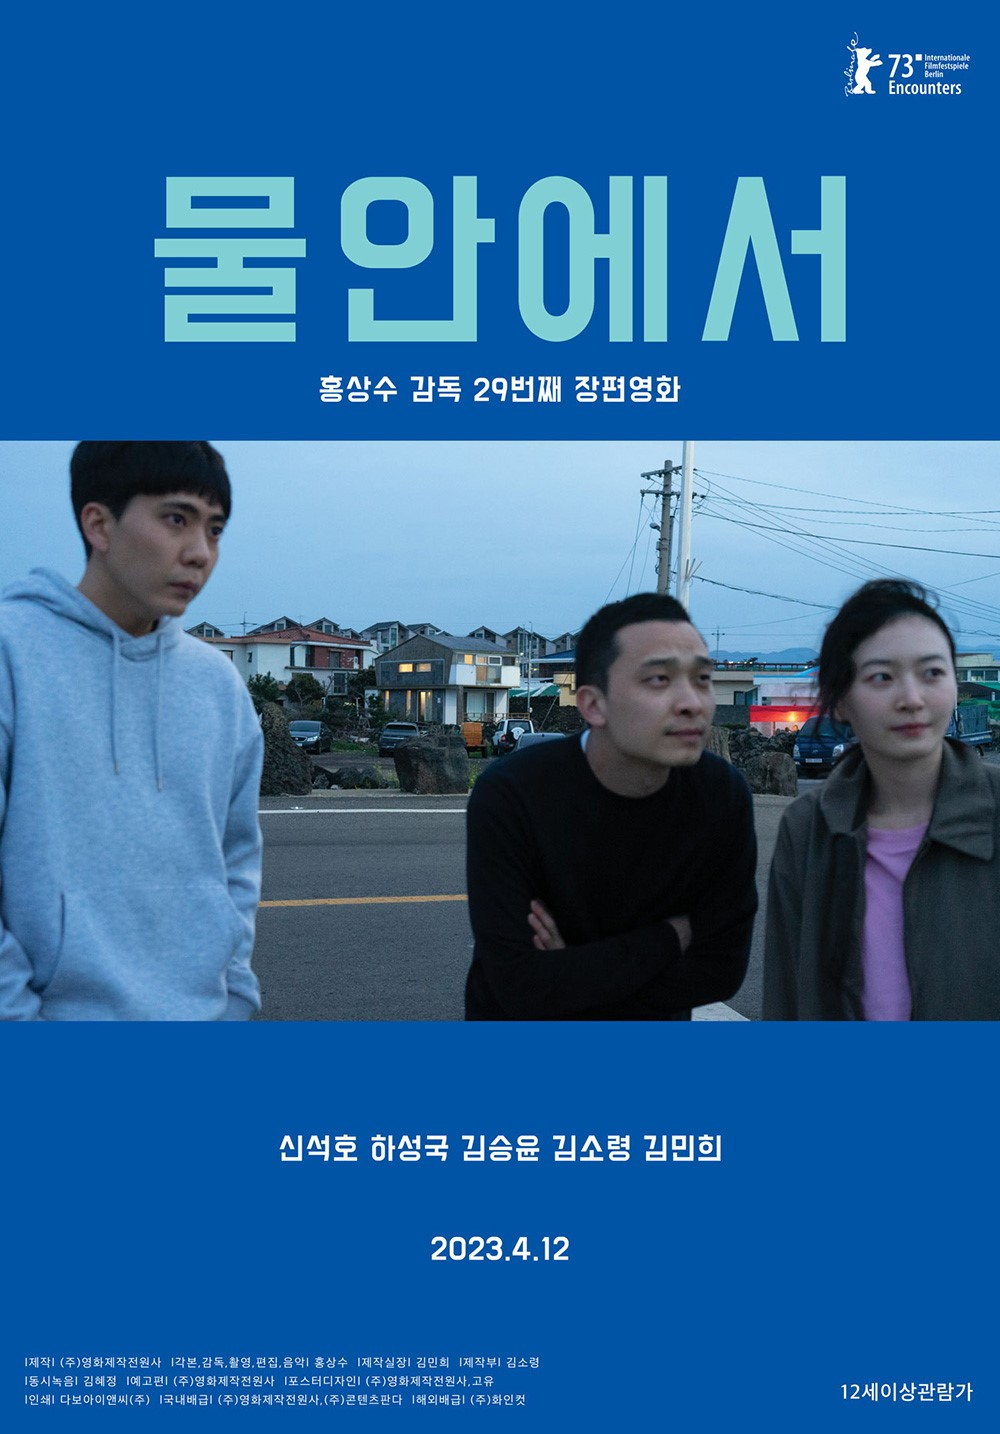 “In Water” (Jeonwonsa Film Co.)